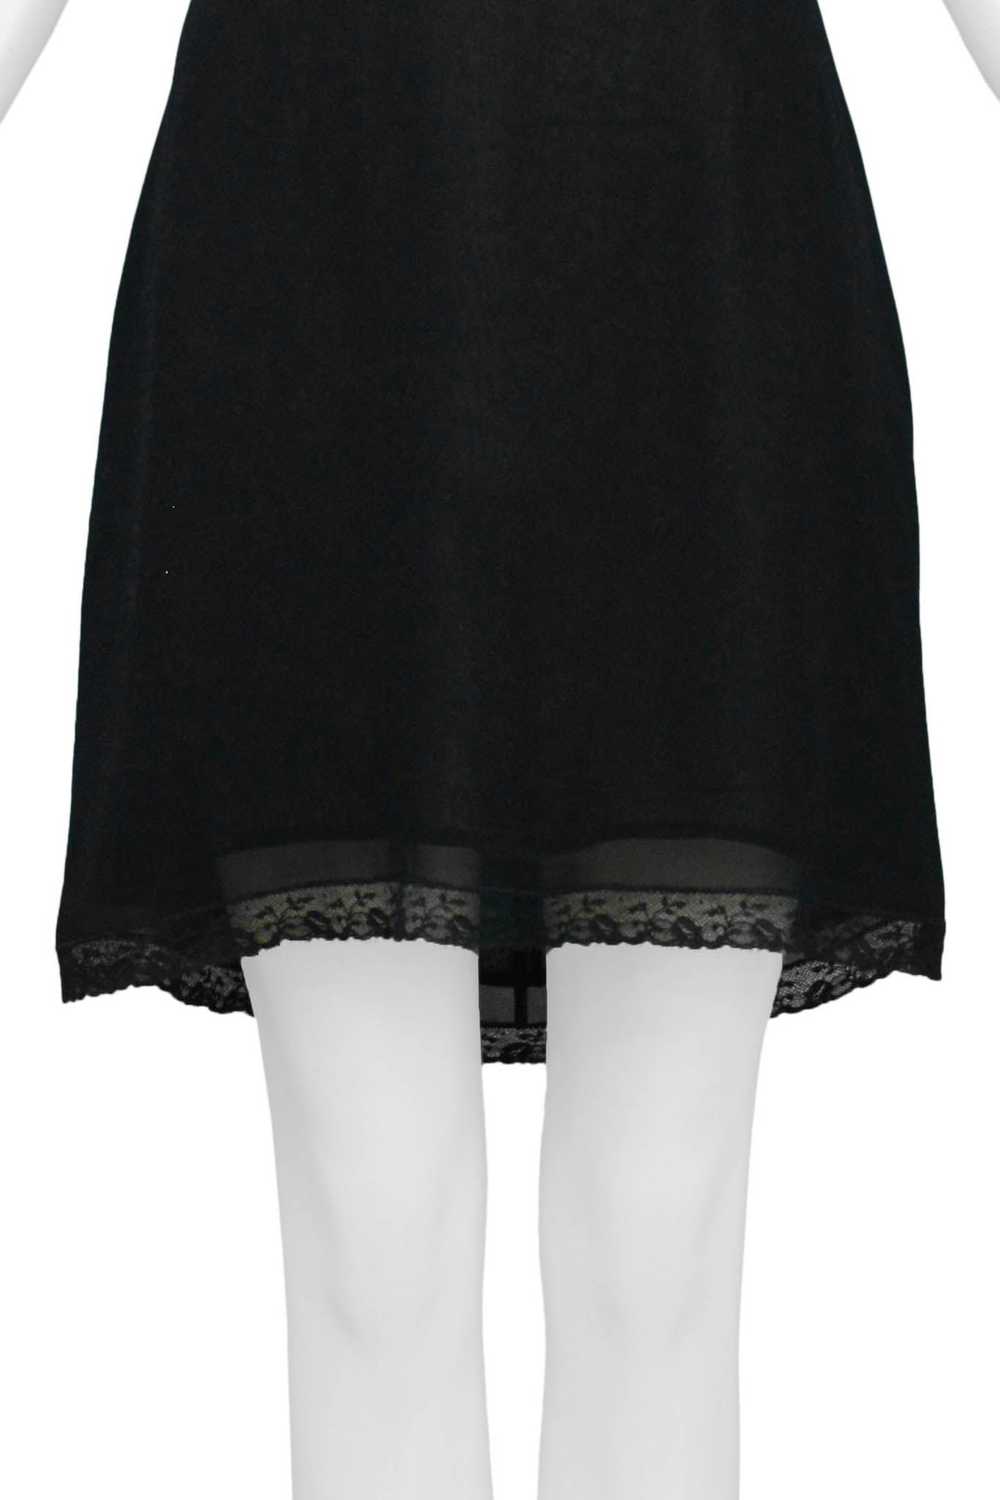 DOLCE & GABBANA BLACK SLIP DRESS WITH LACE TRIM - image 7